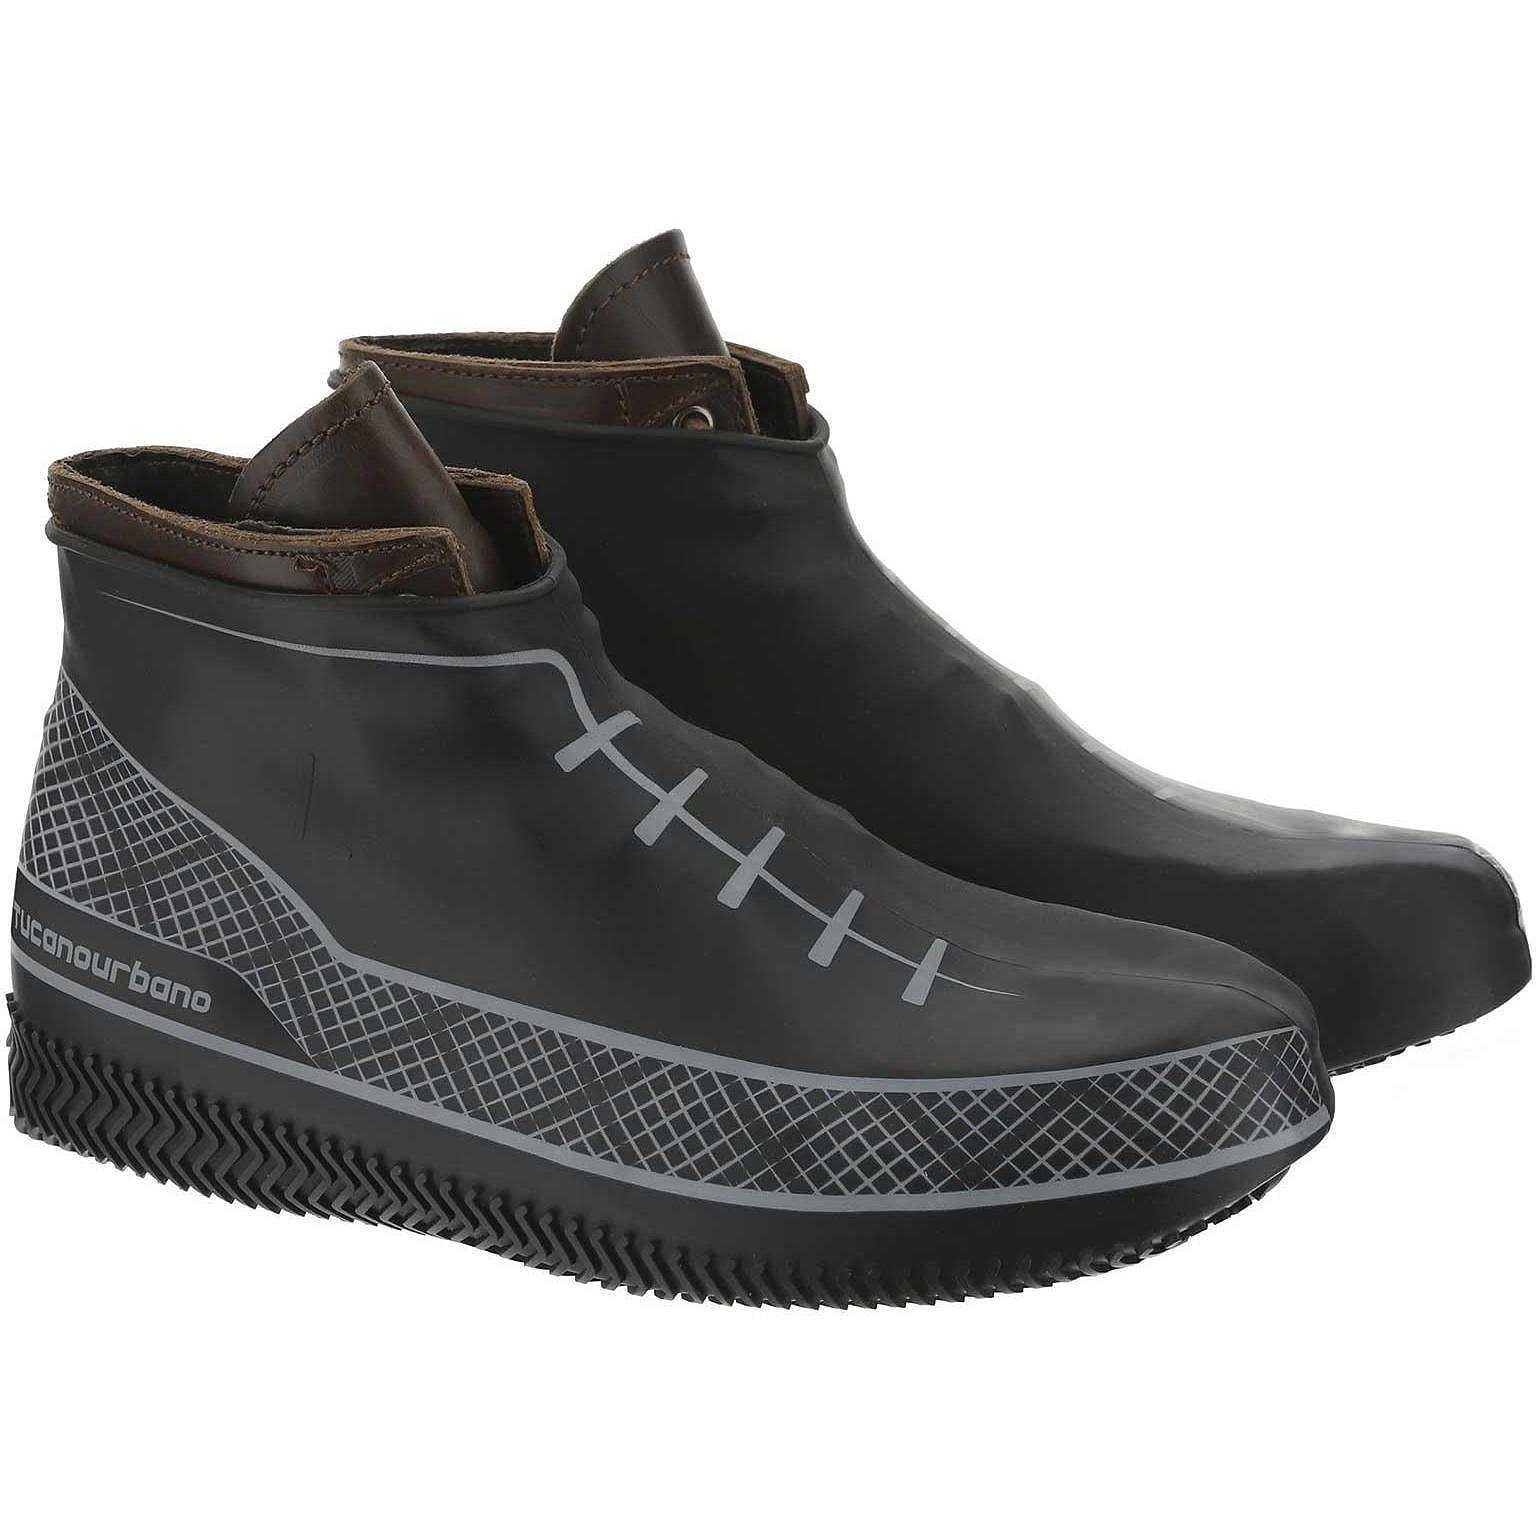 Waterproof shoe cover Tucano Urbano 519 FOOTERINE Sneaker For Sale Online -  